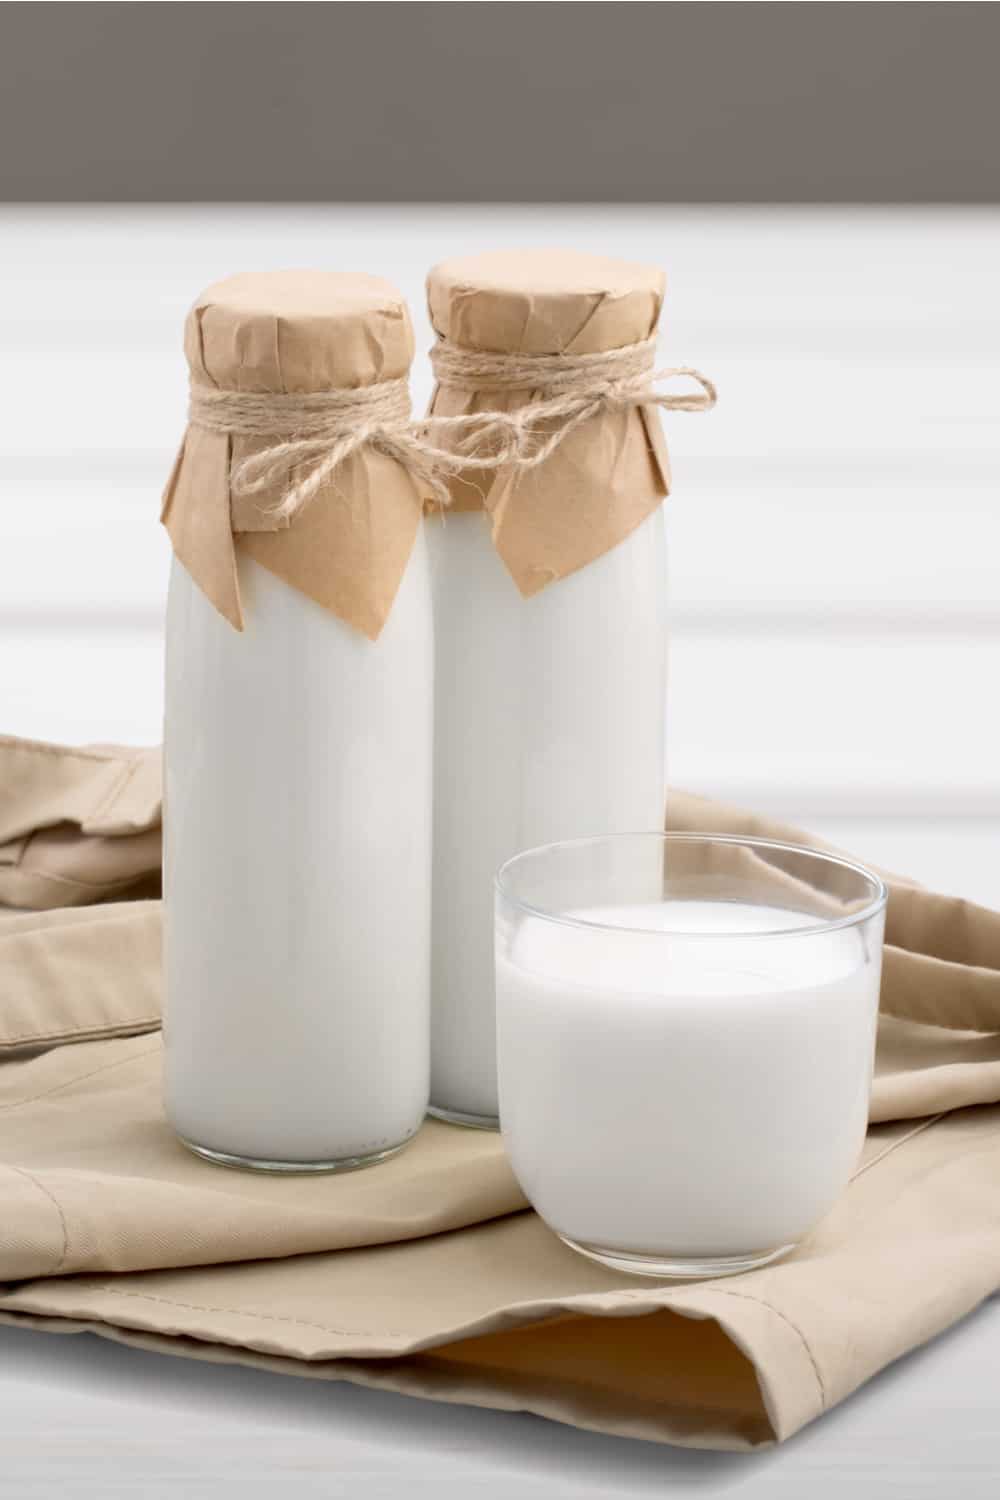 How long does buttermilk last